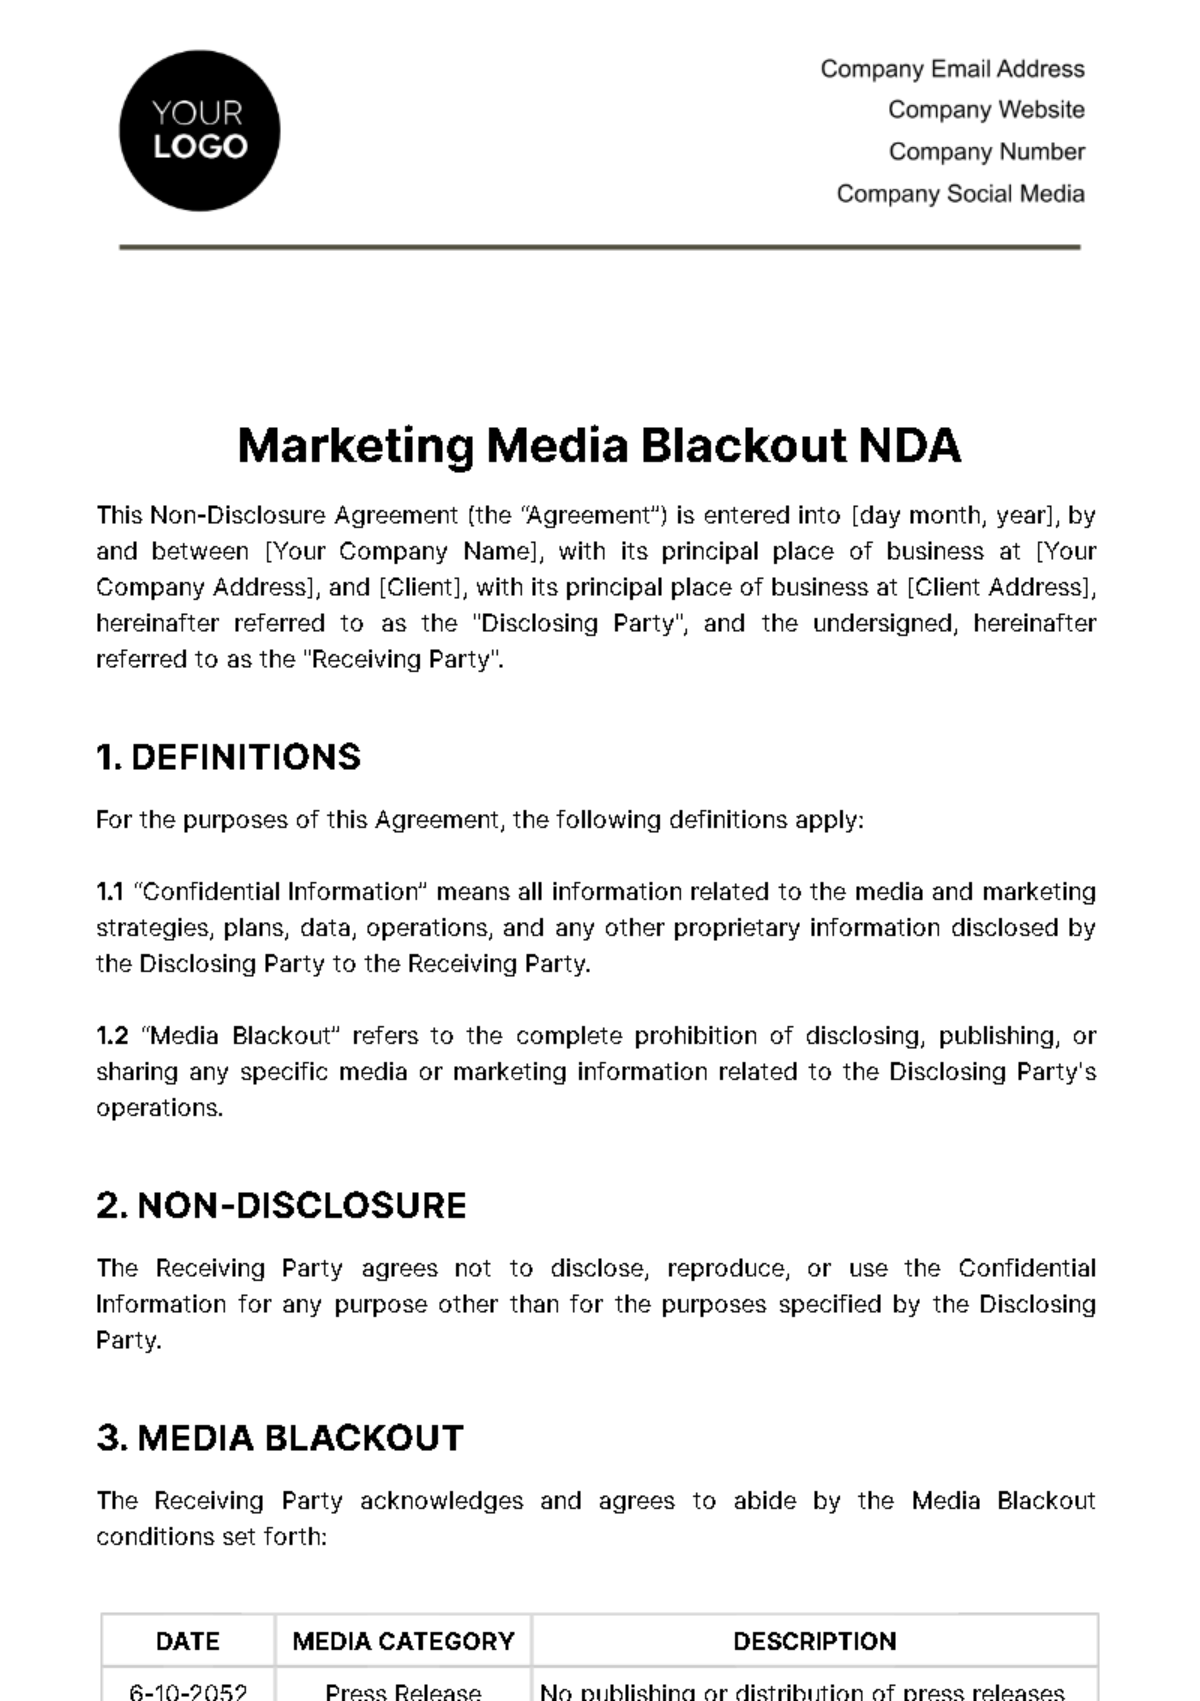 Marketing Media Blackout NDA Template